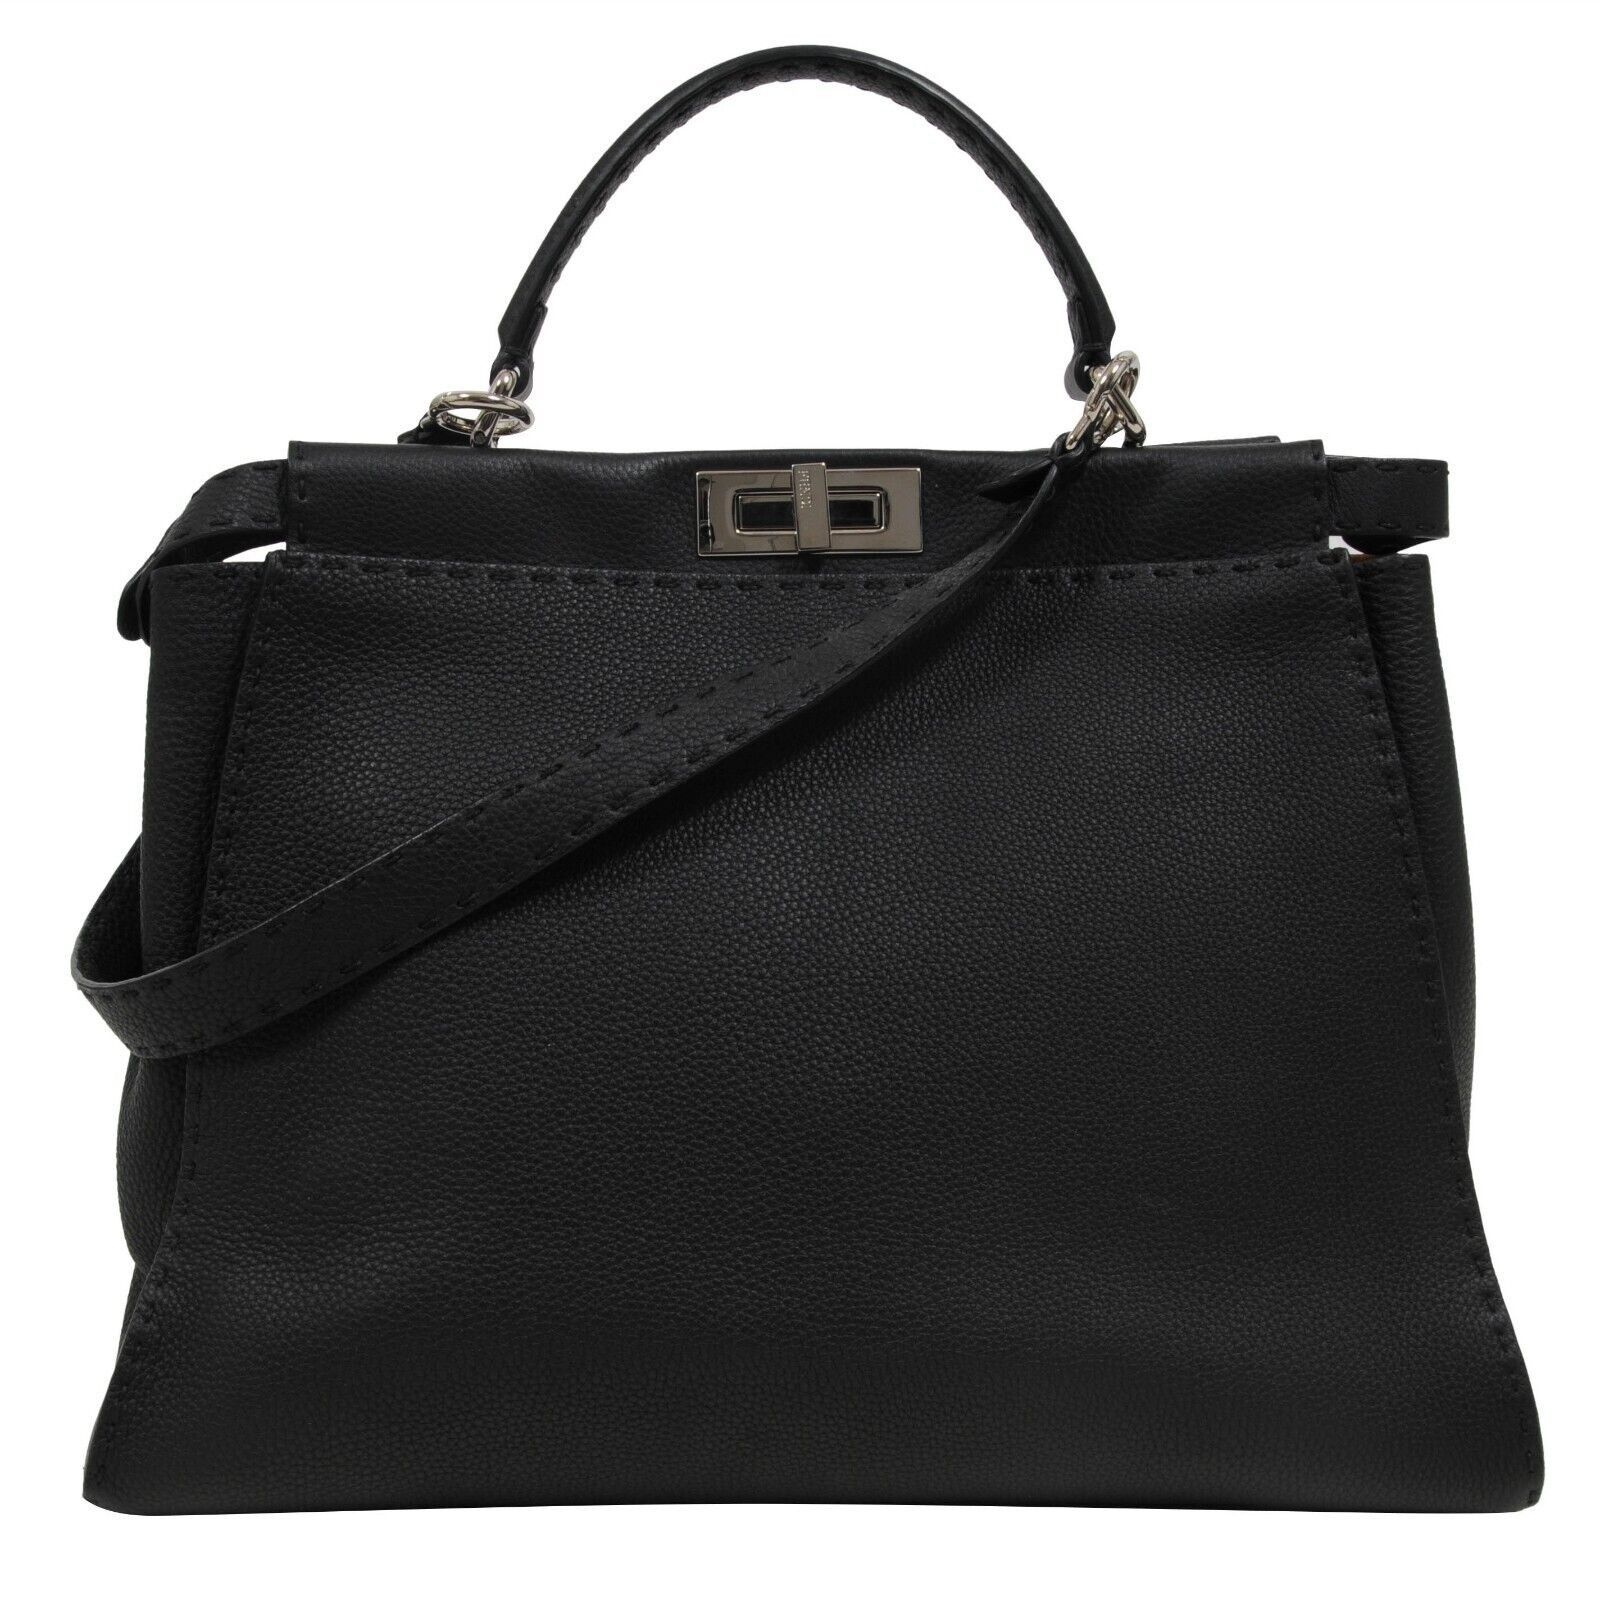 Fendi Peekaboo Satchel Tote Large Black Leather Shoulder Bag Size ONE SIZE - 13 Preview